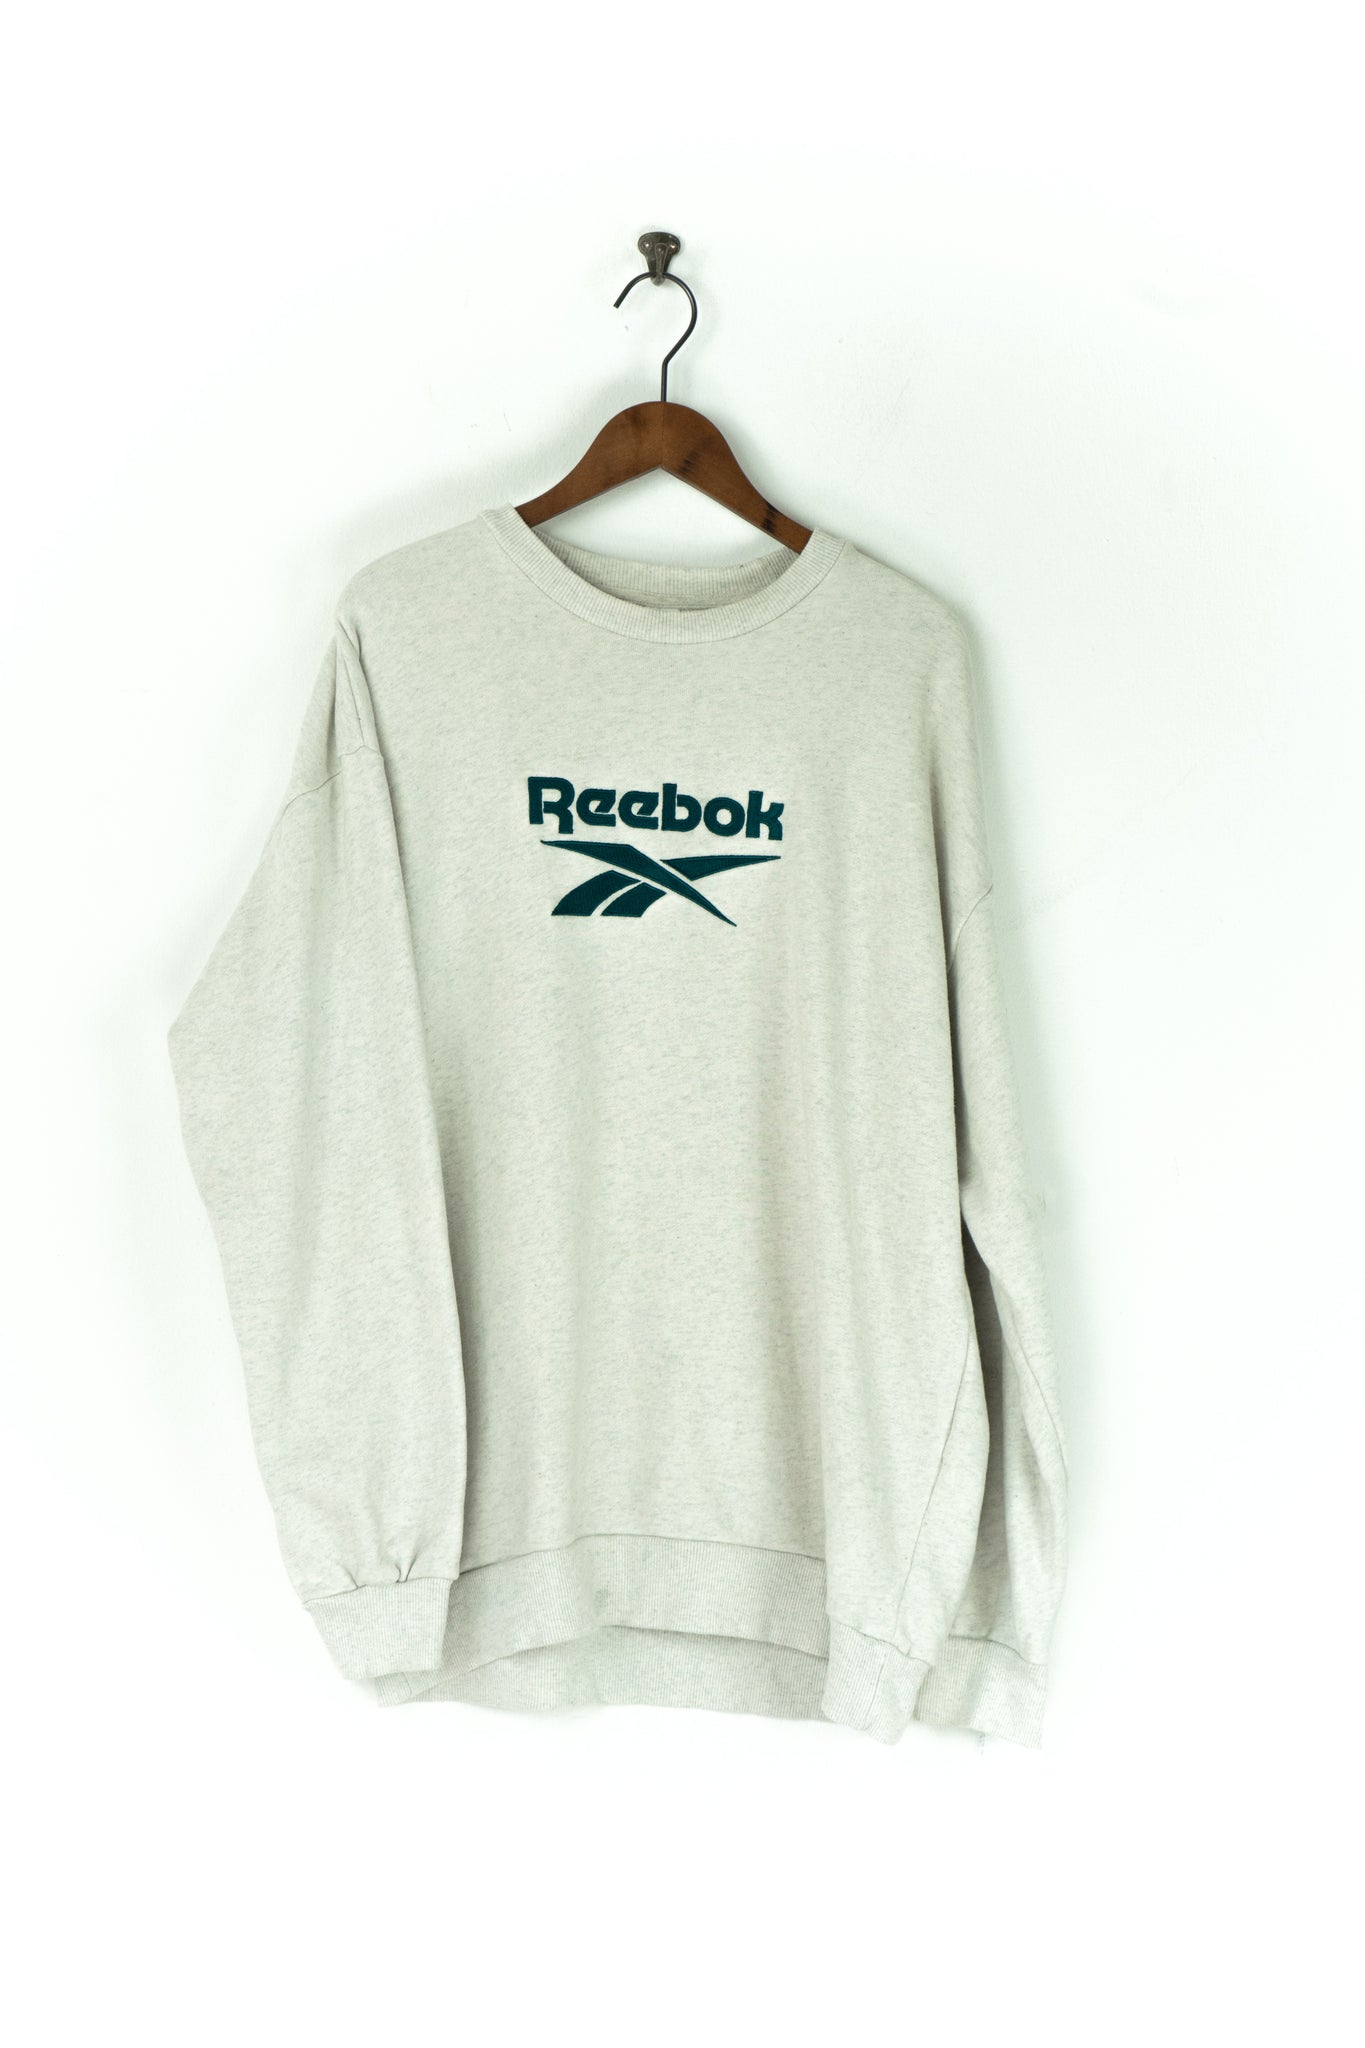 Vintage Reebok Sweater L/XL